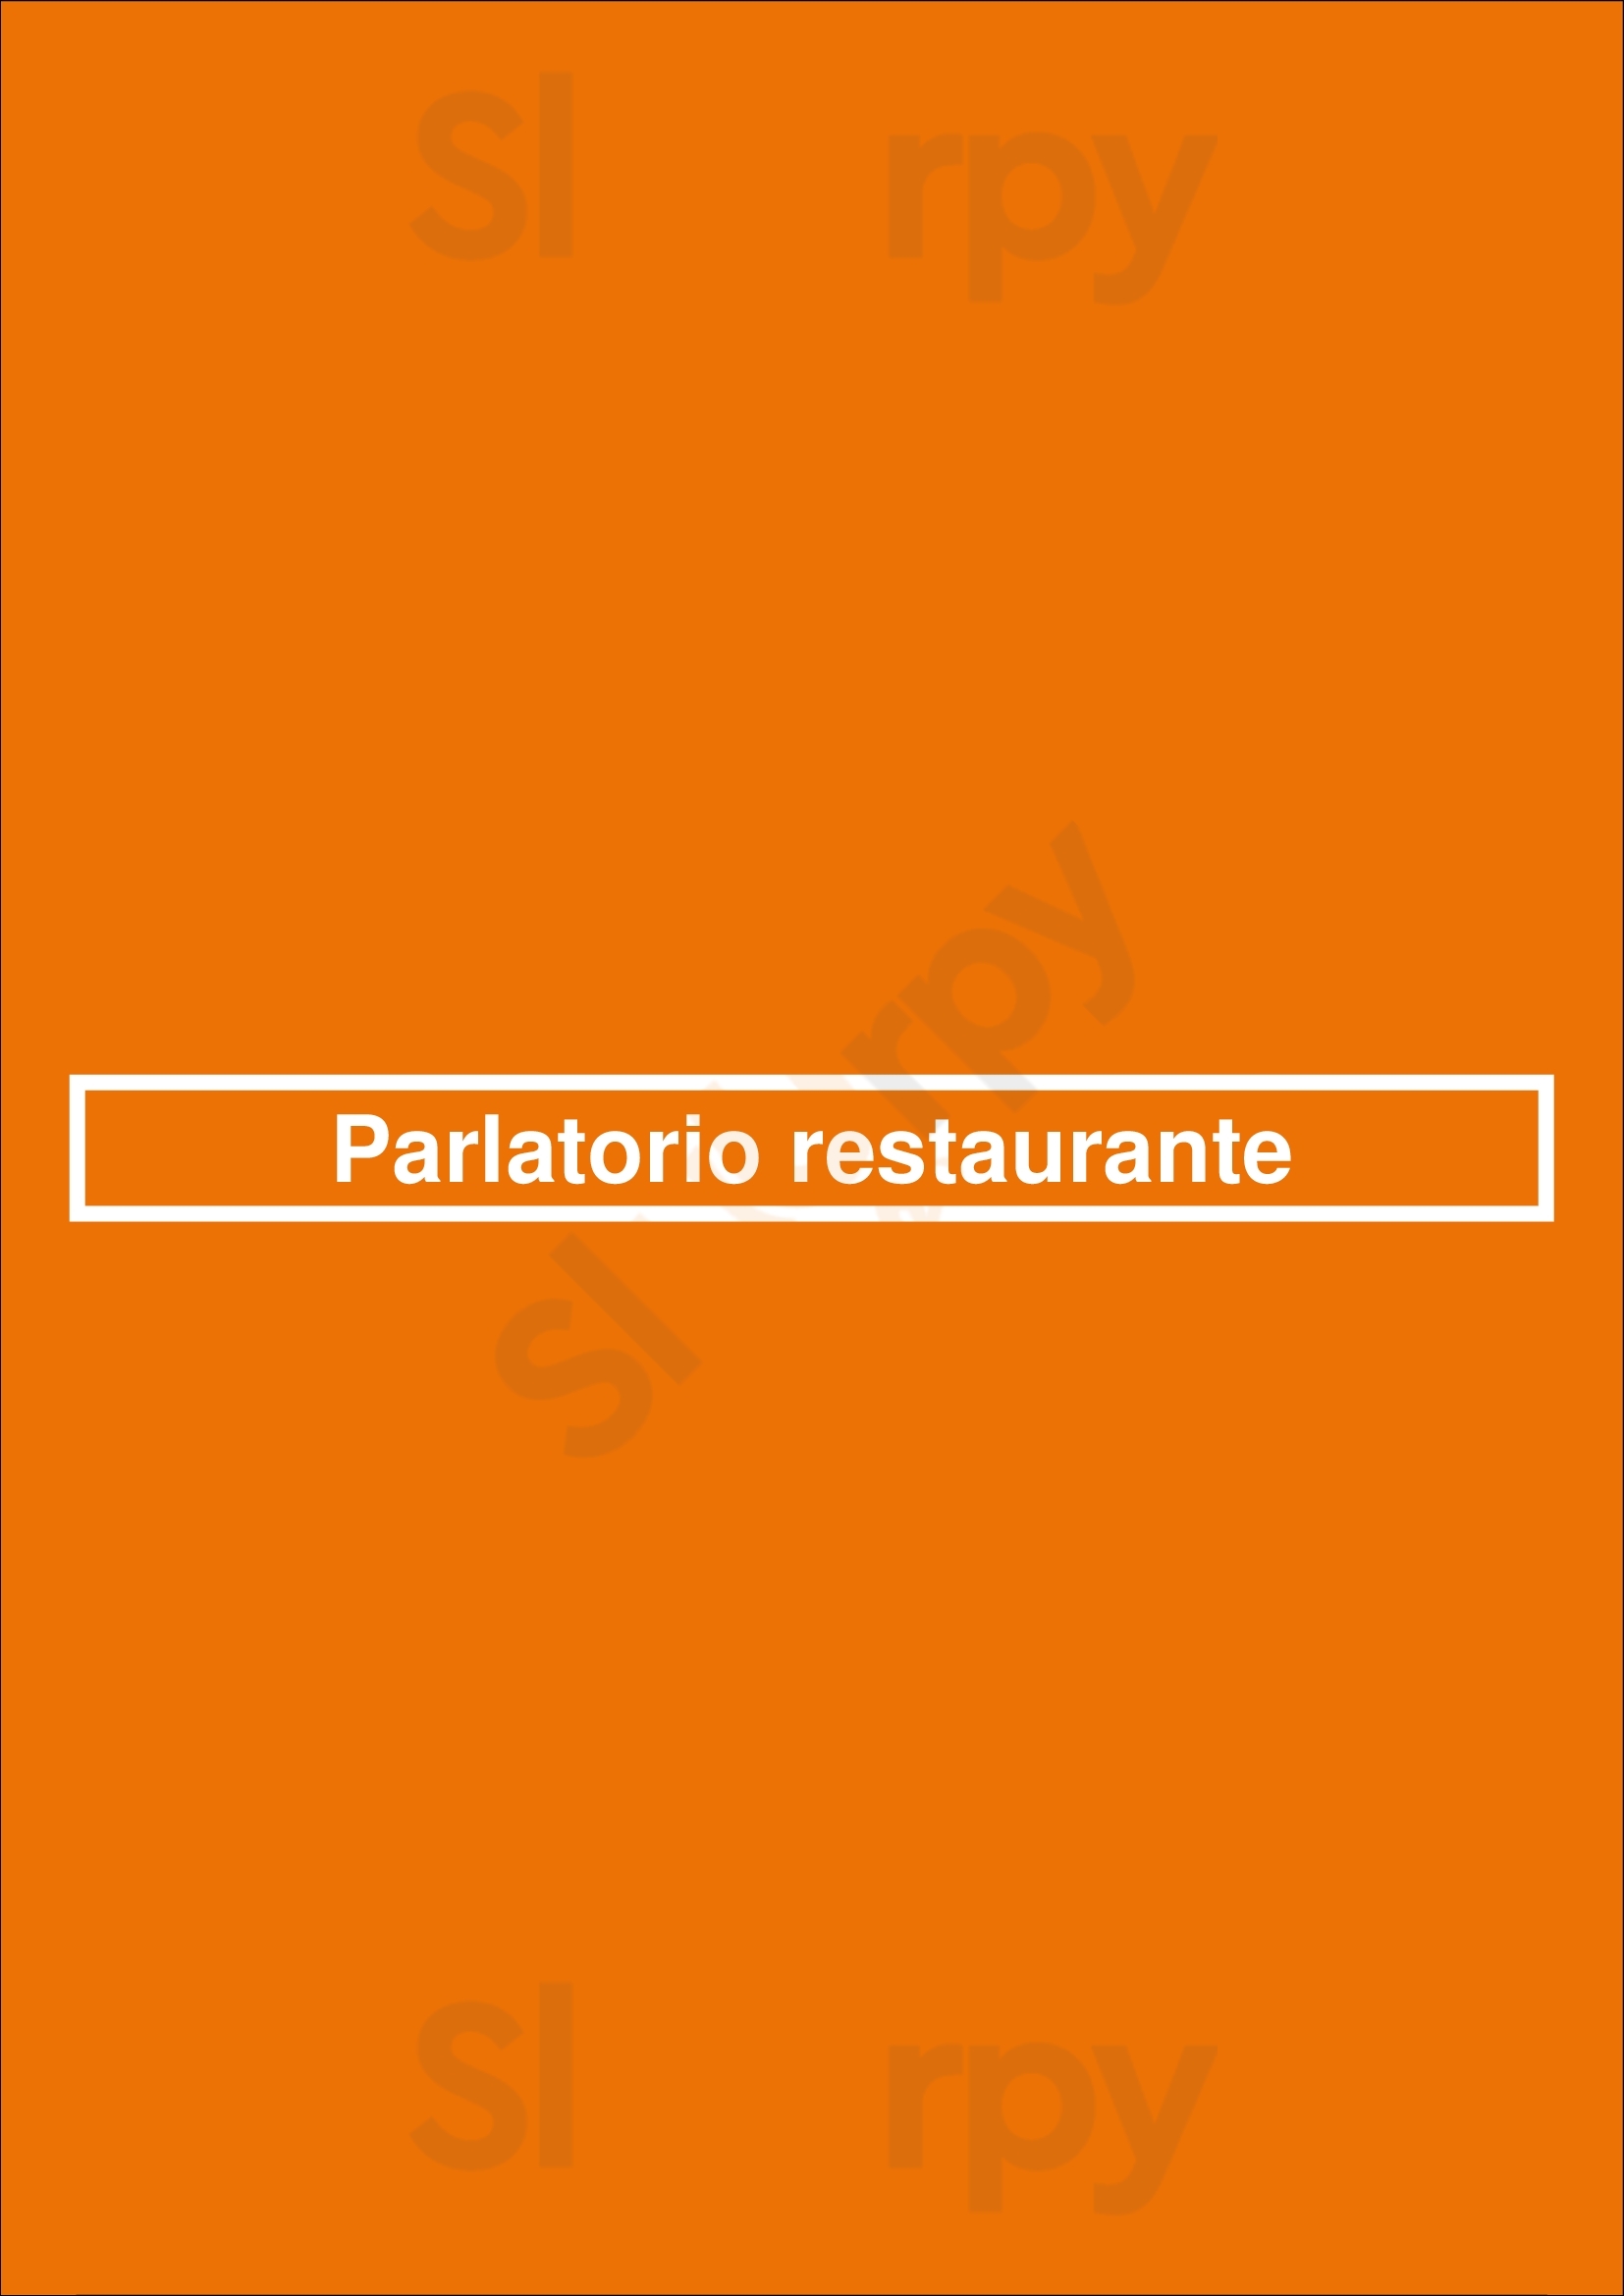 Parlatorio Restaurante Lisboa Menu - 1